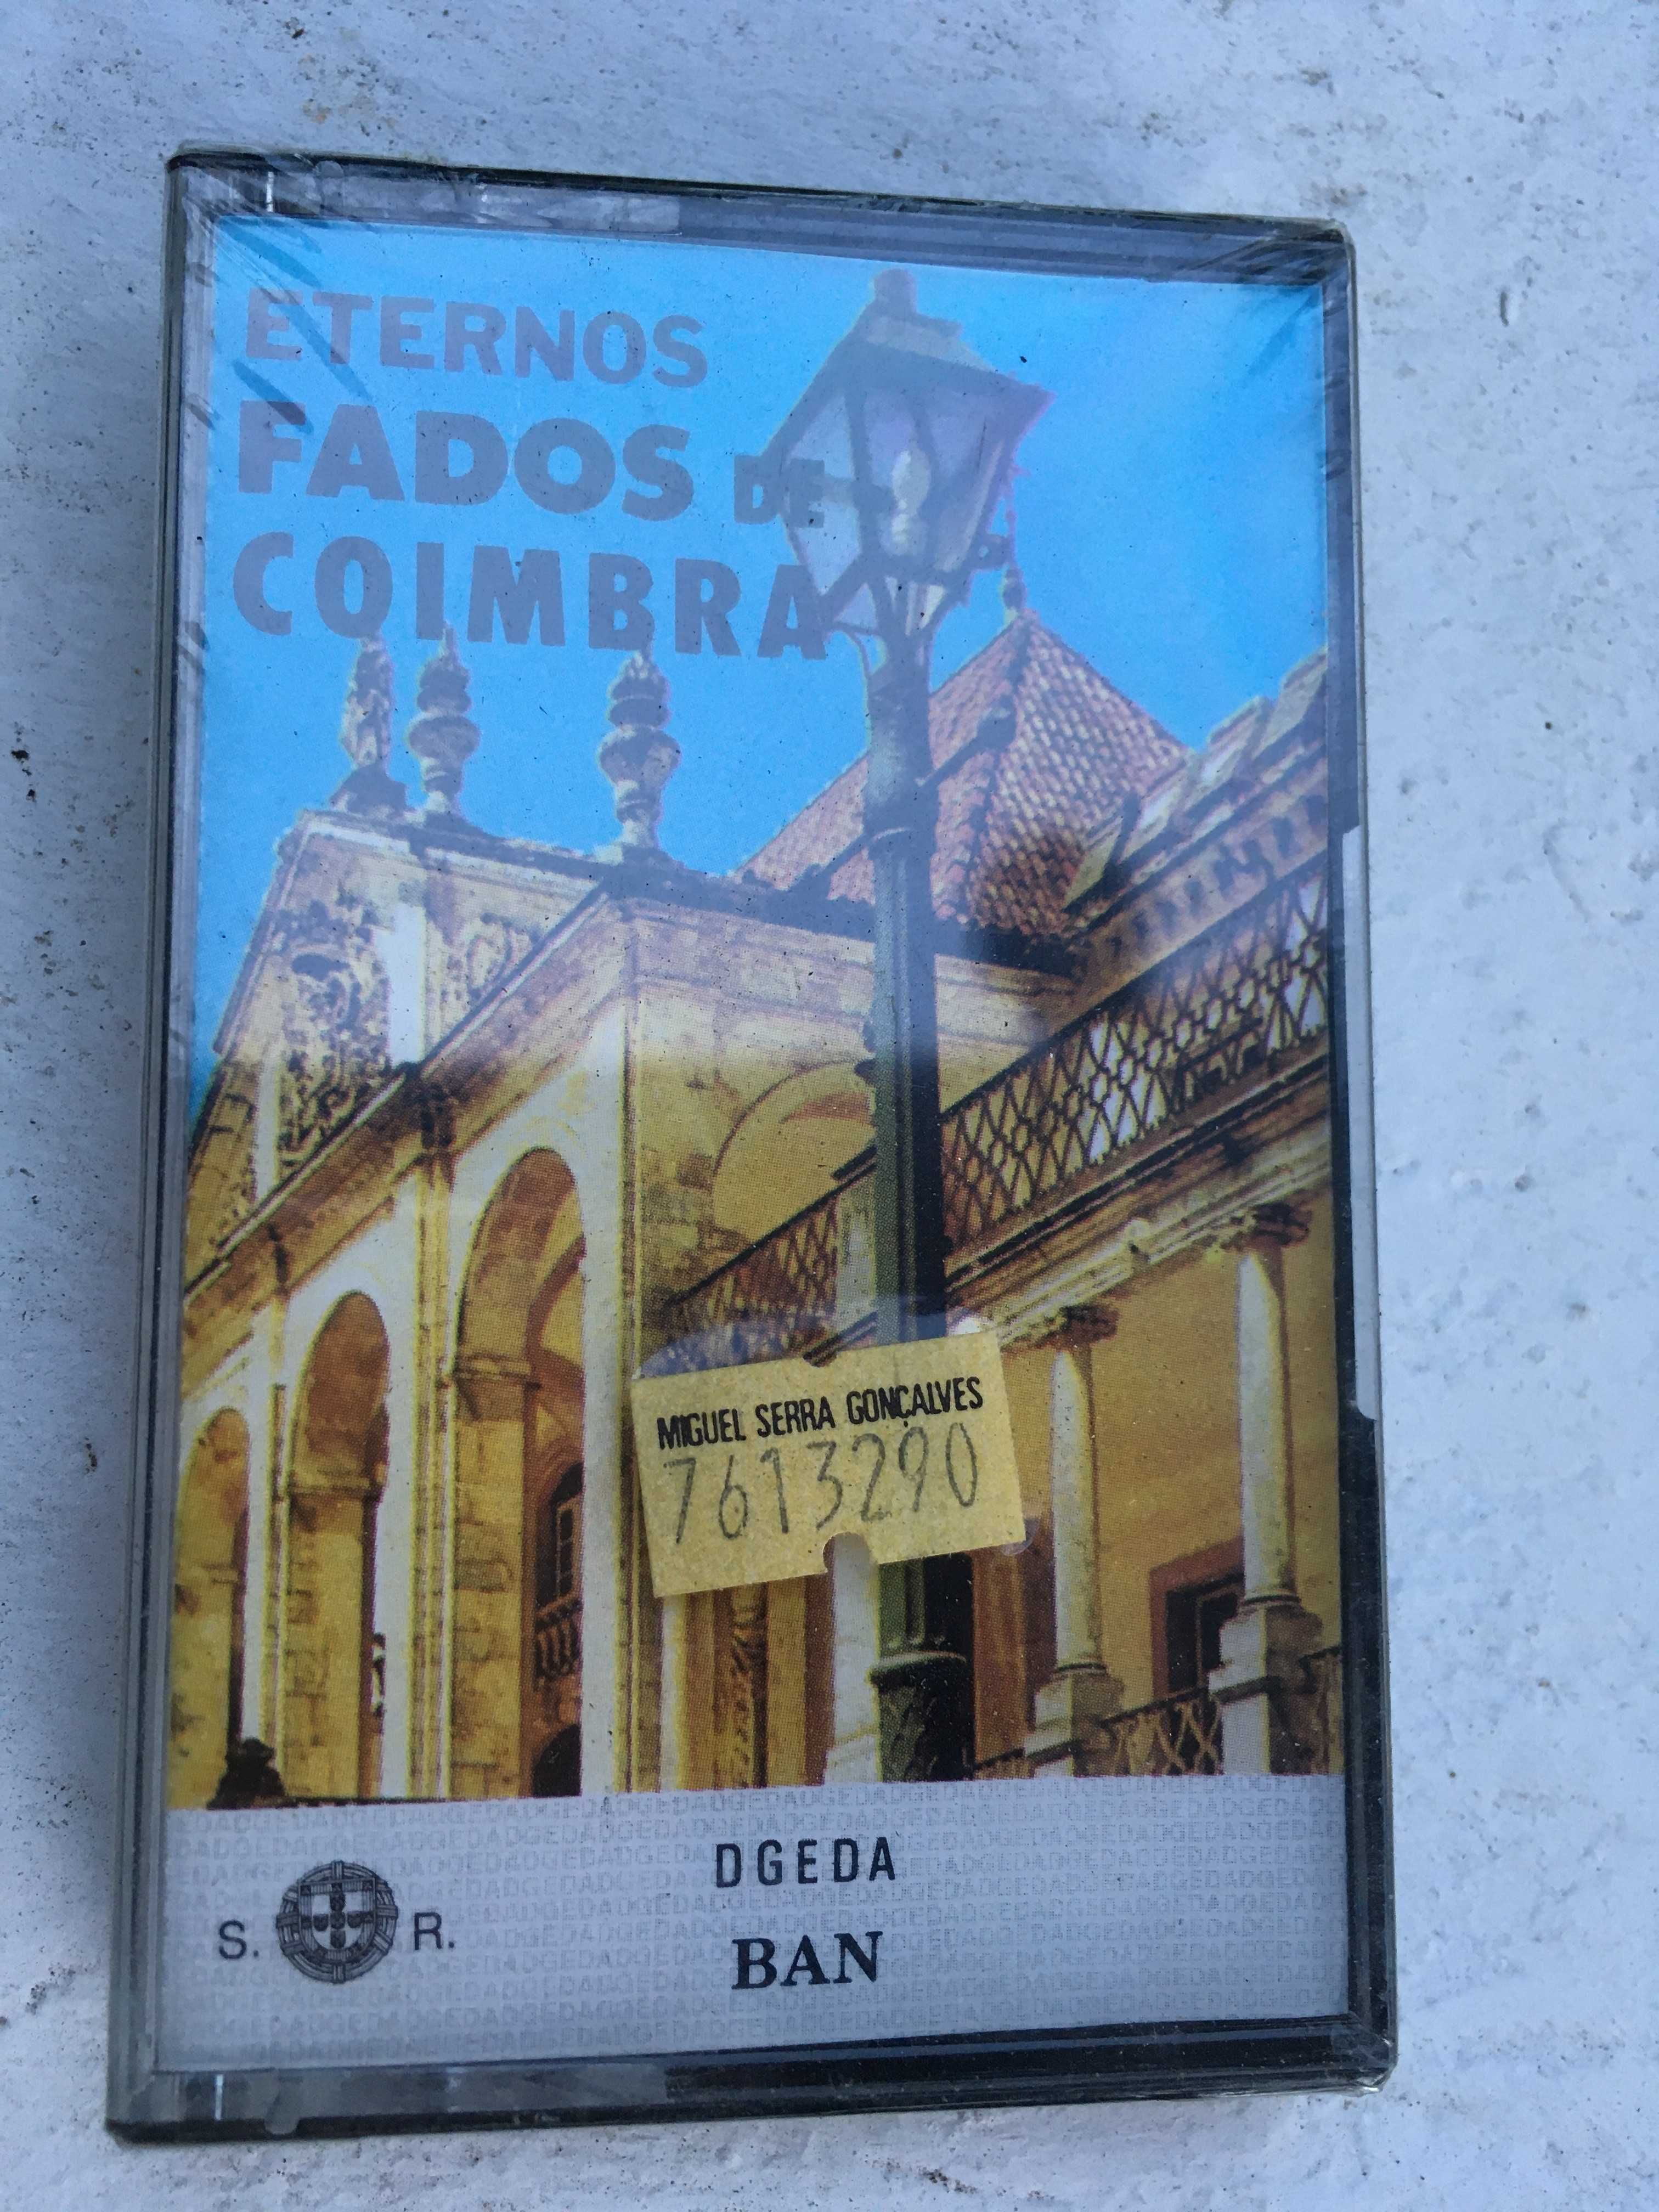 Cassete de áudio nova selada Fados de Coimbra VINTAGE